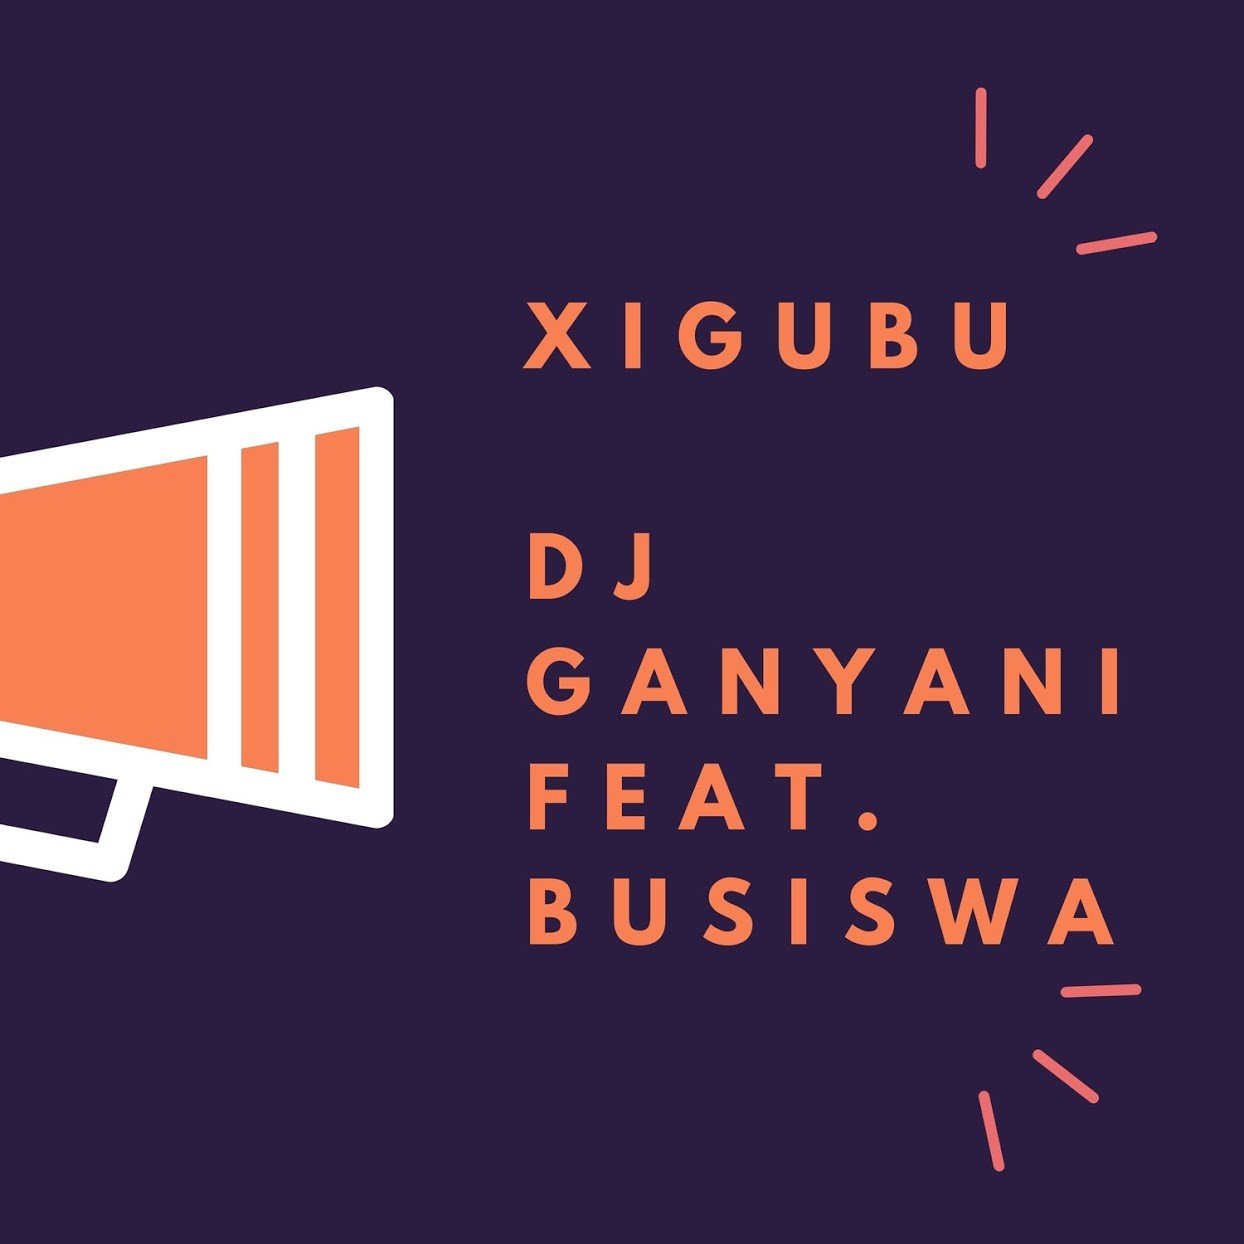 Dj Ganyani feat. Busiswa - Xigubu